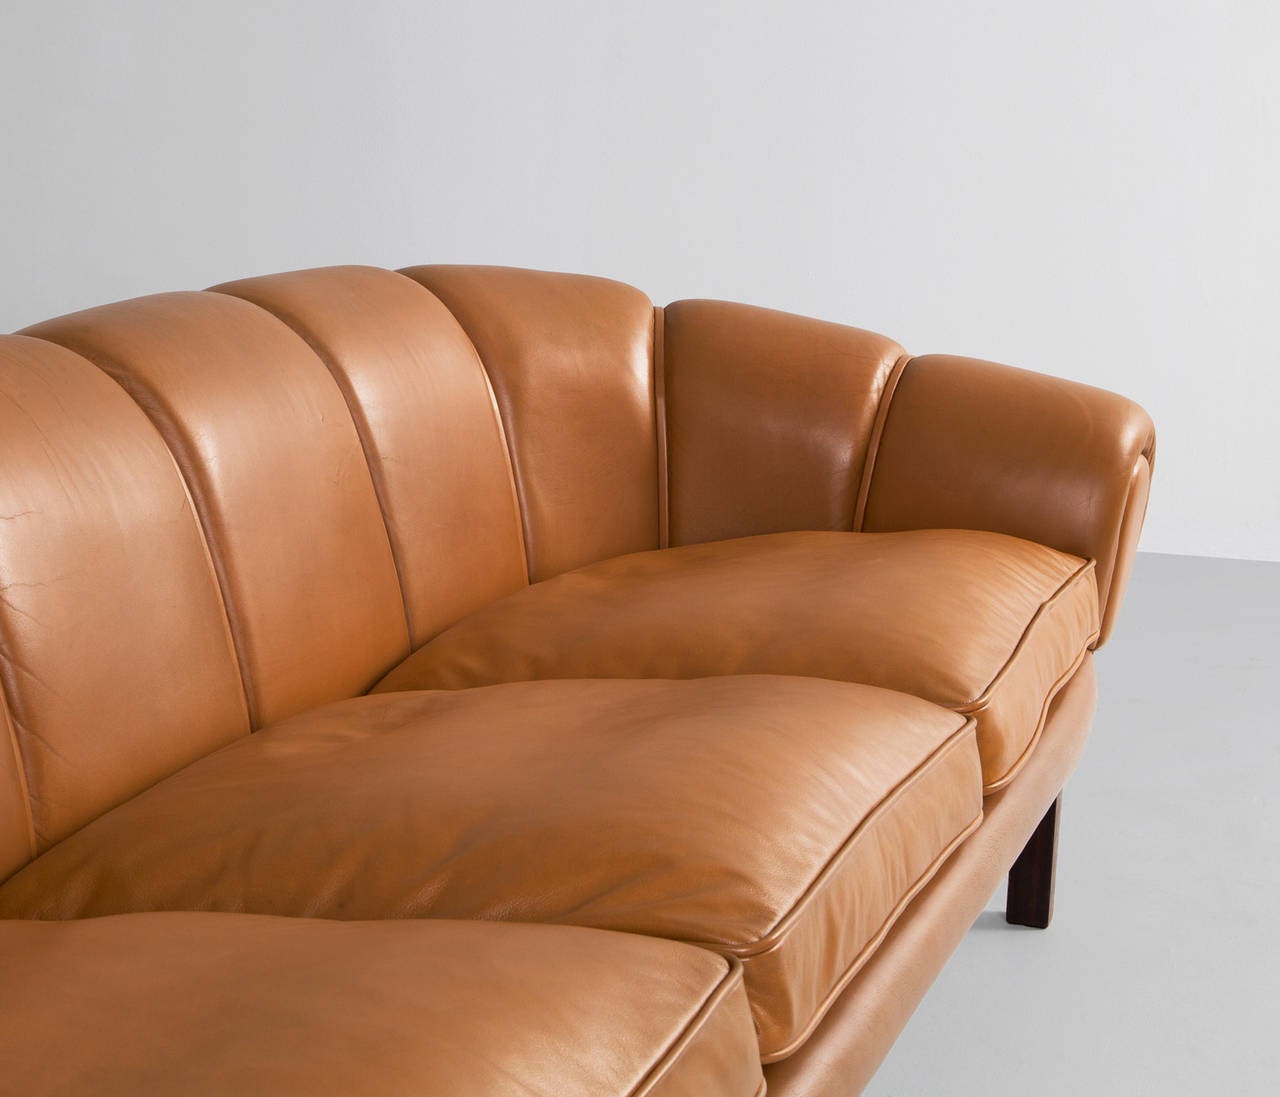 Danish Attributed to Illum Wikkelsø Three-Seat Sofa in Original Leather